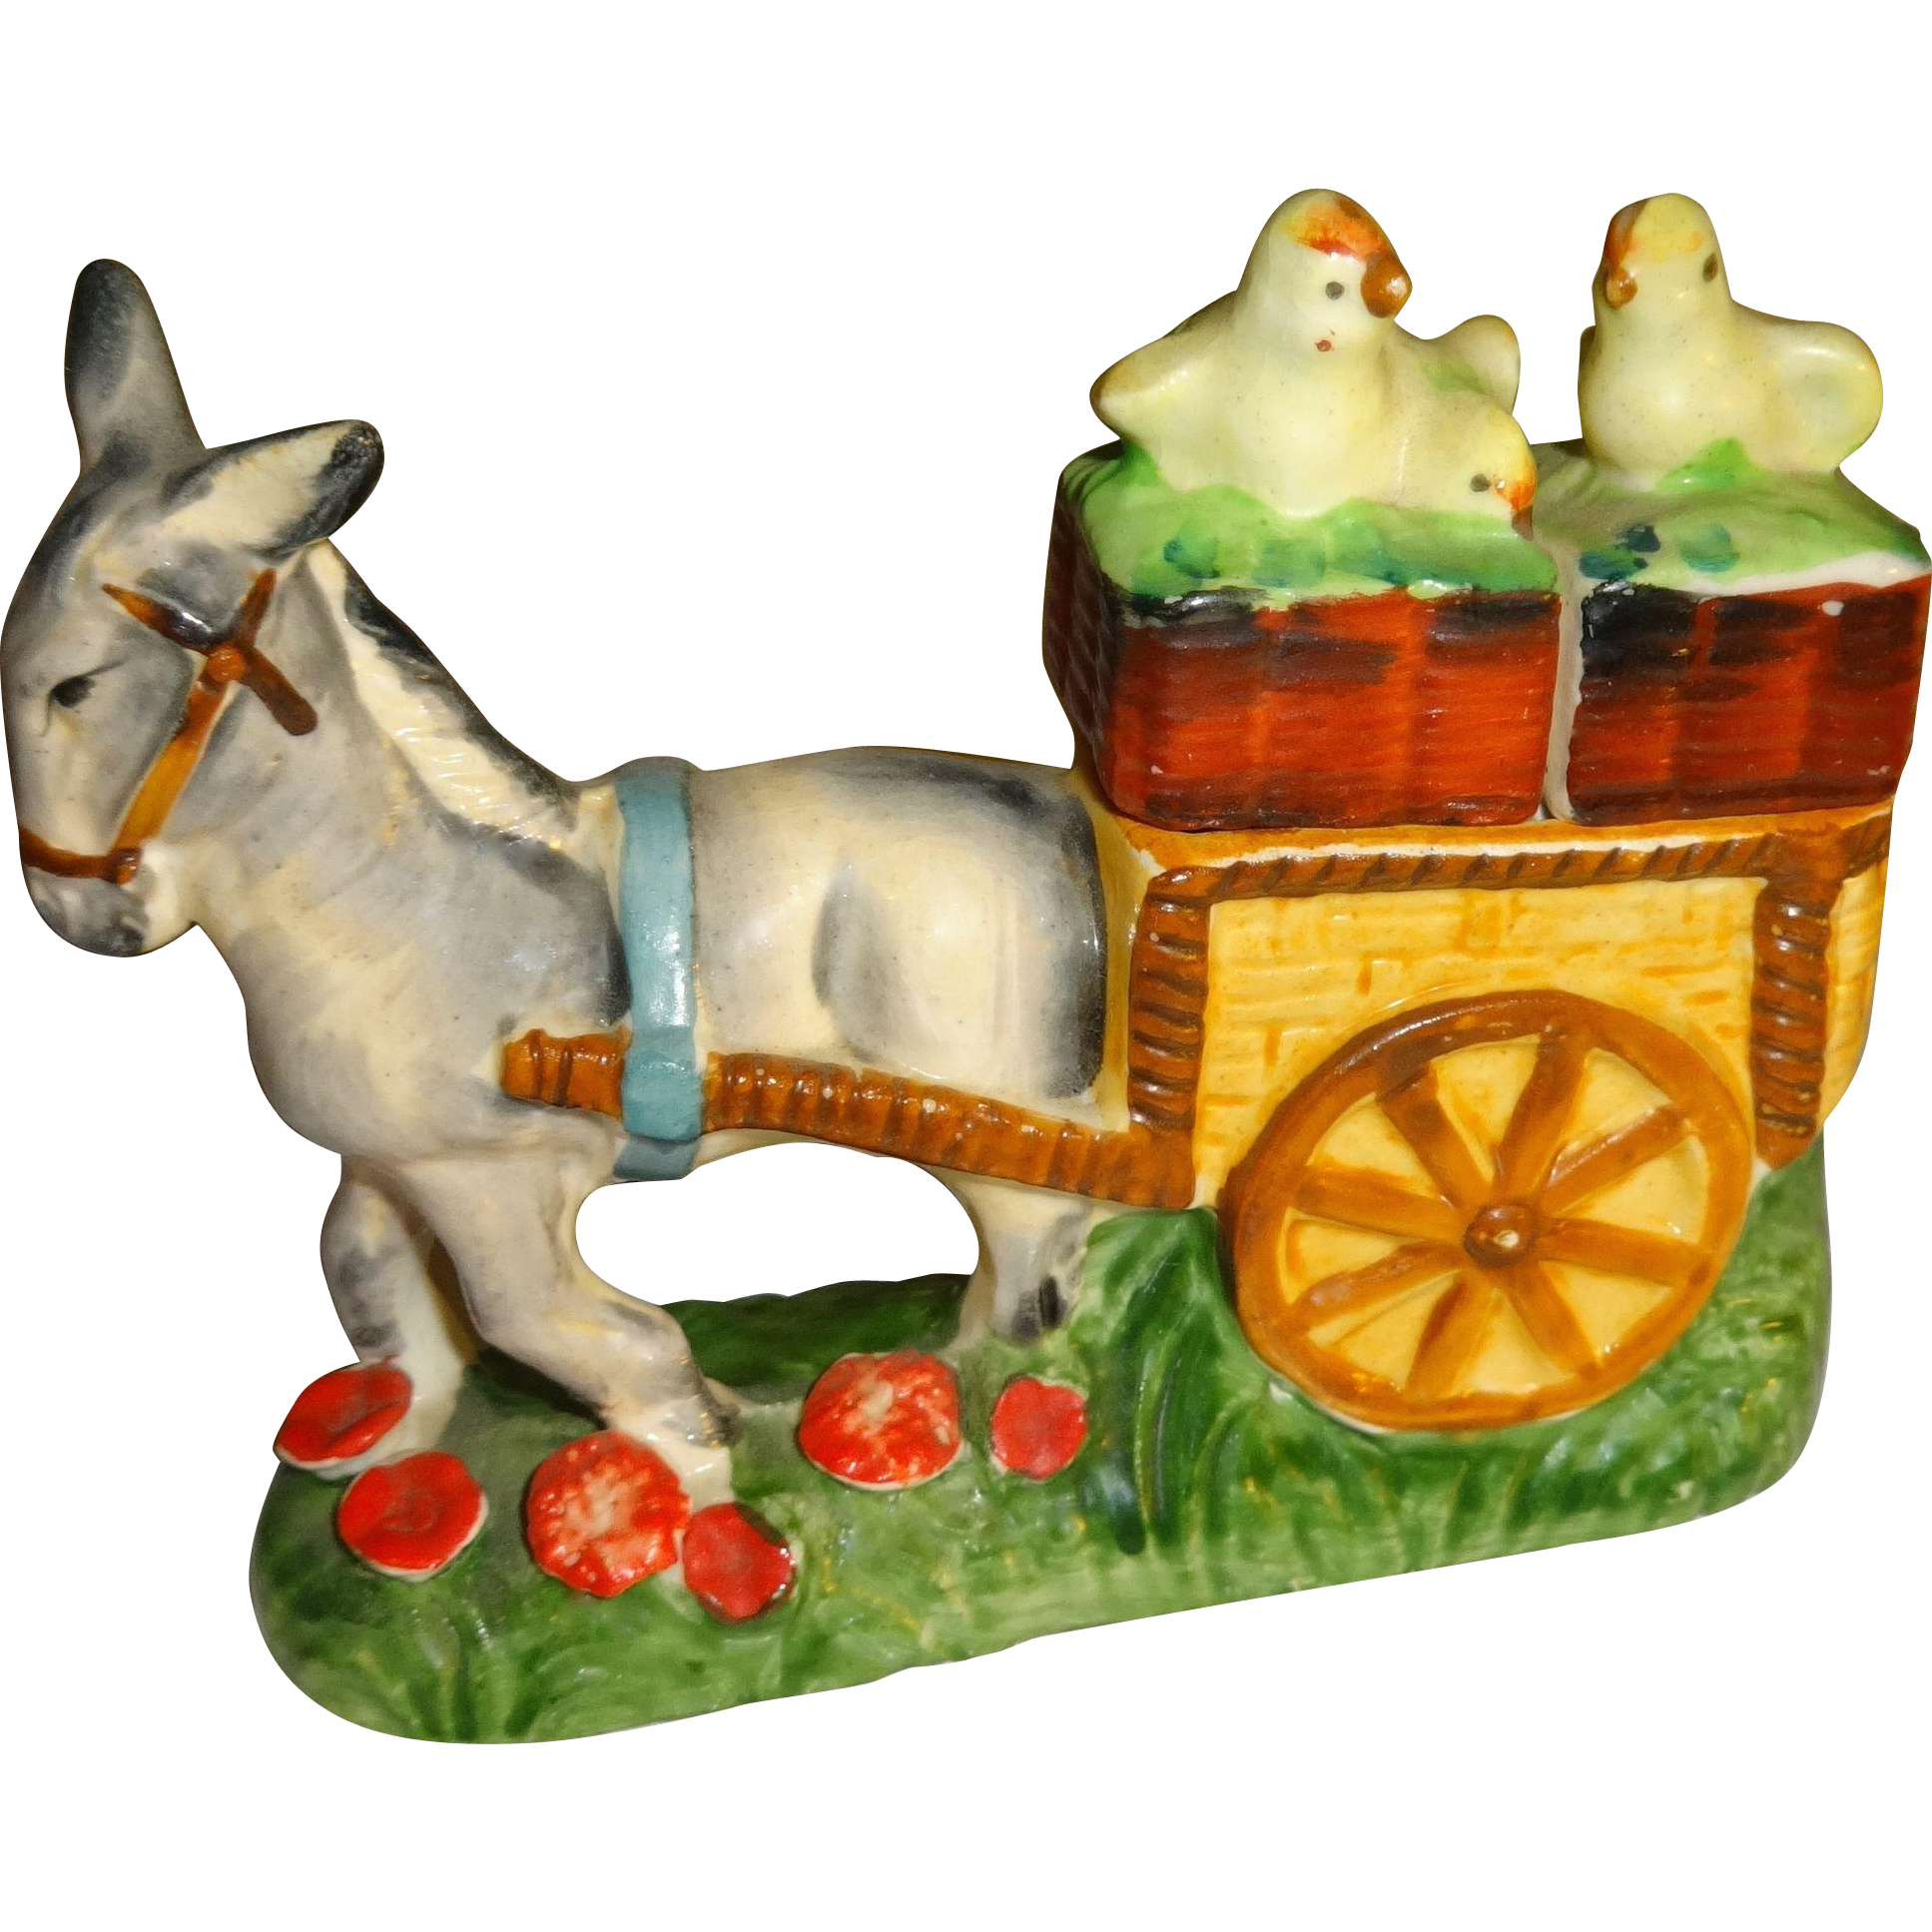 donkey clipart donkey cart